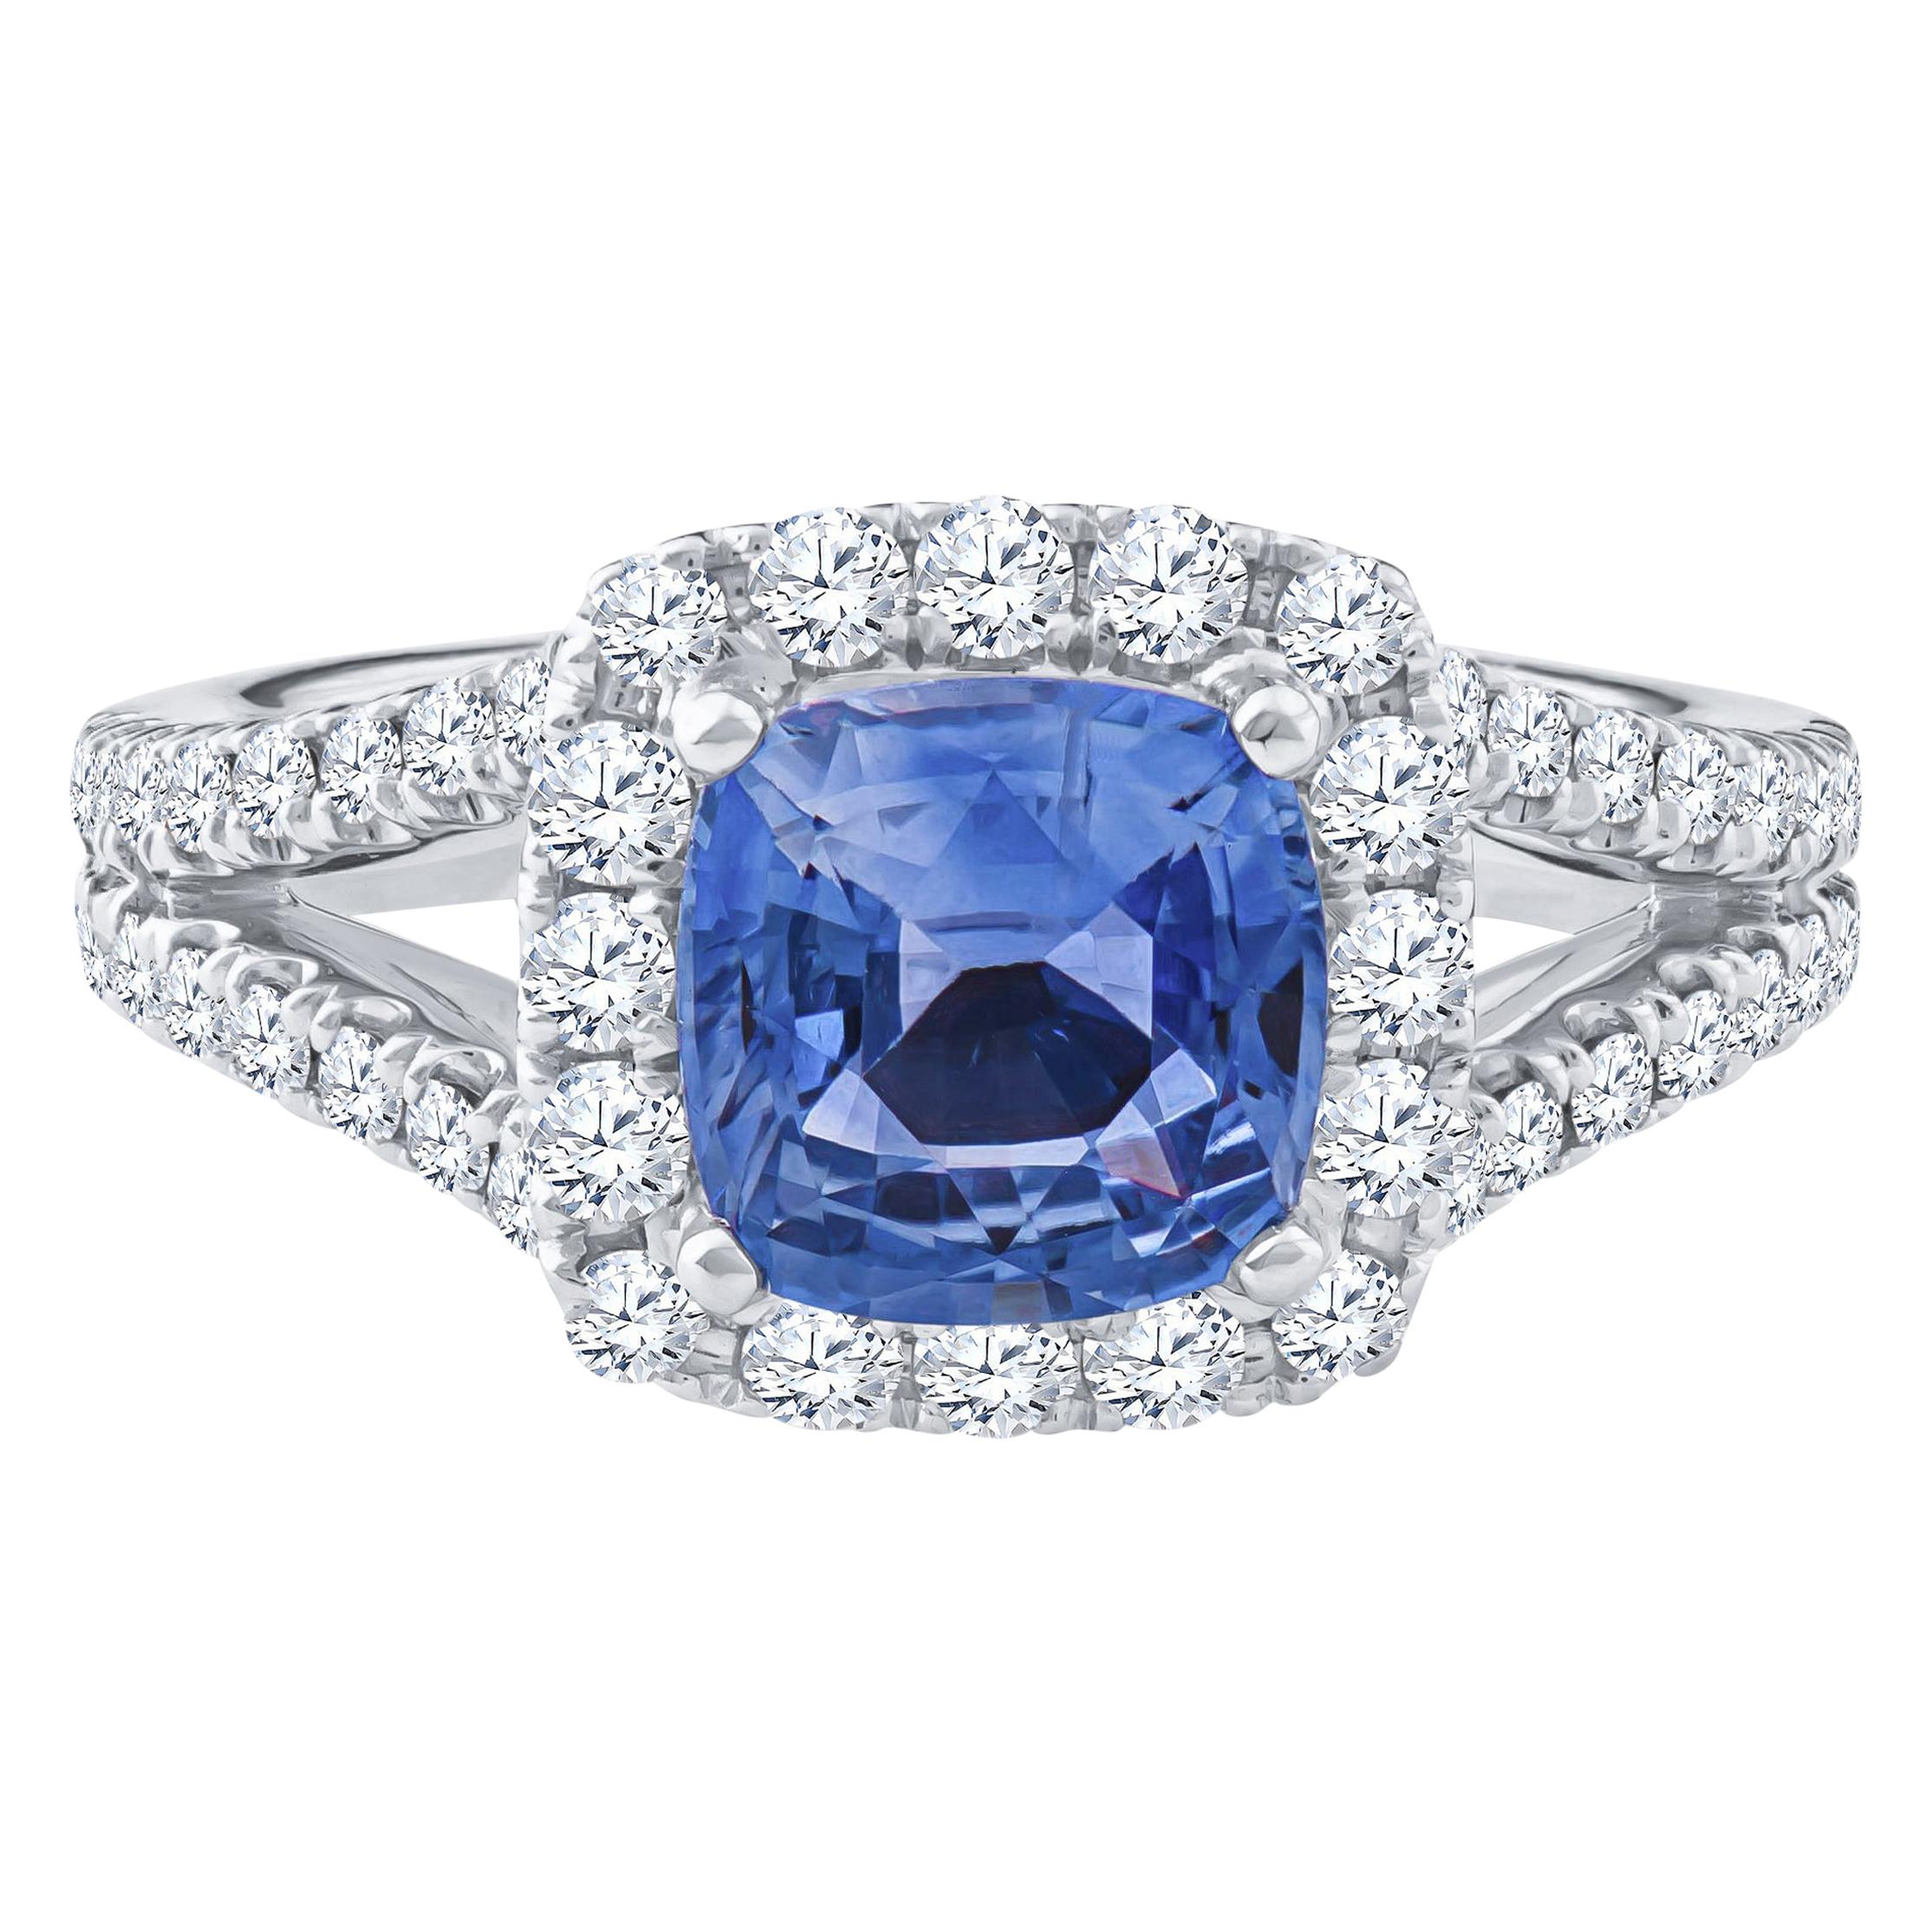 2.11 Carat Cushion Cut Sri Lanka Blue Sapphire GIA Lab Report 18K Diamond Ring 